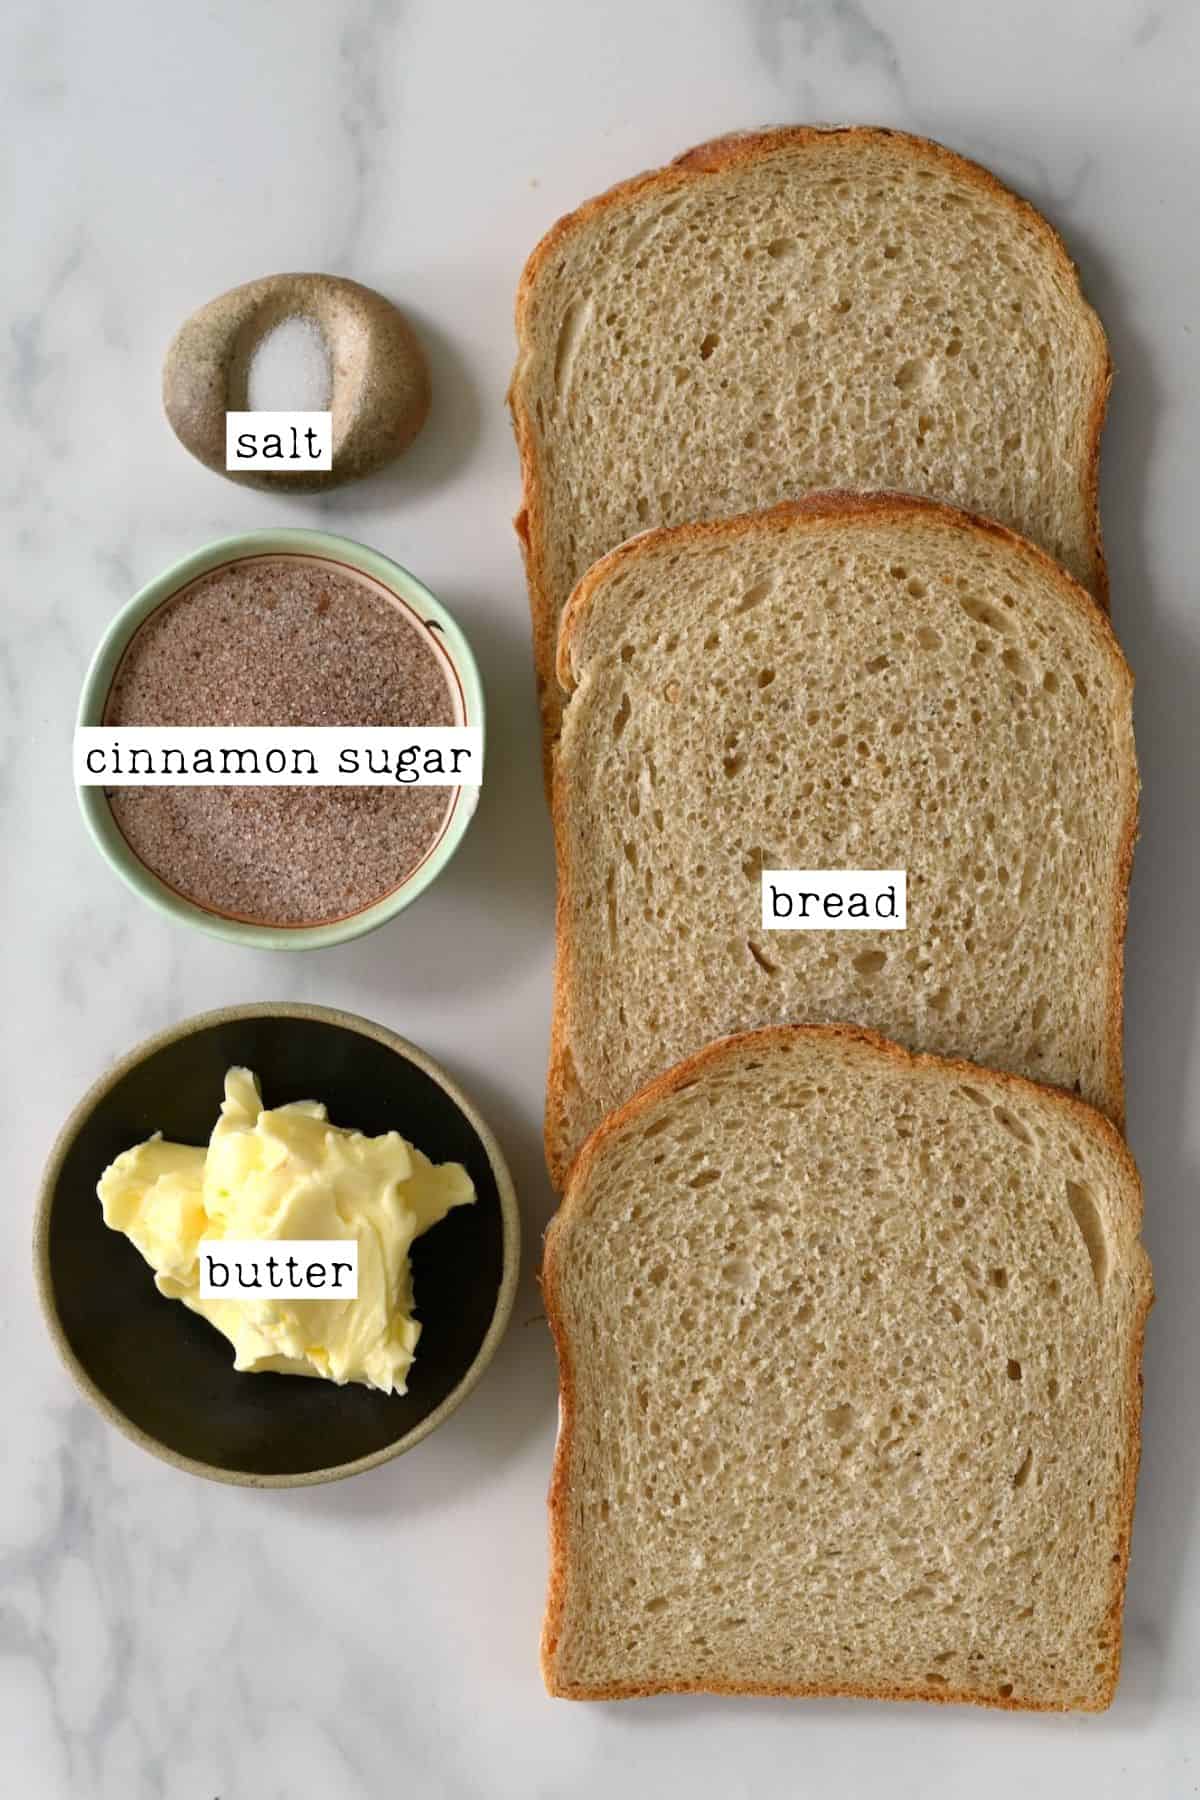 Ingredients for cinnamon toast